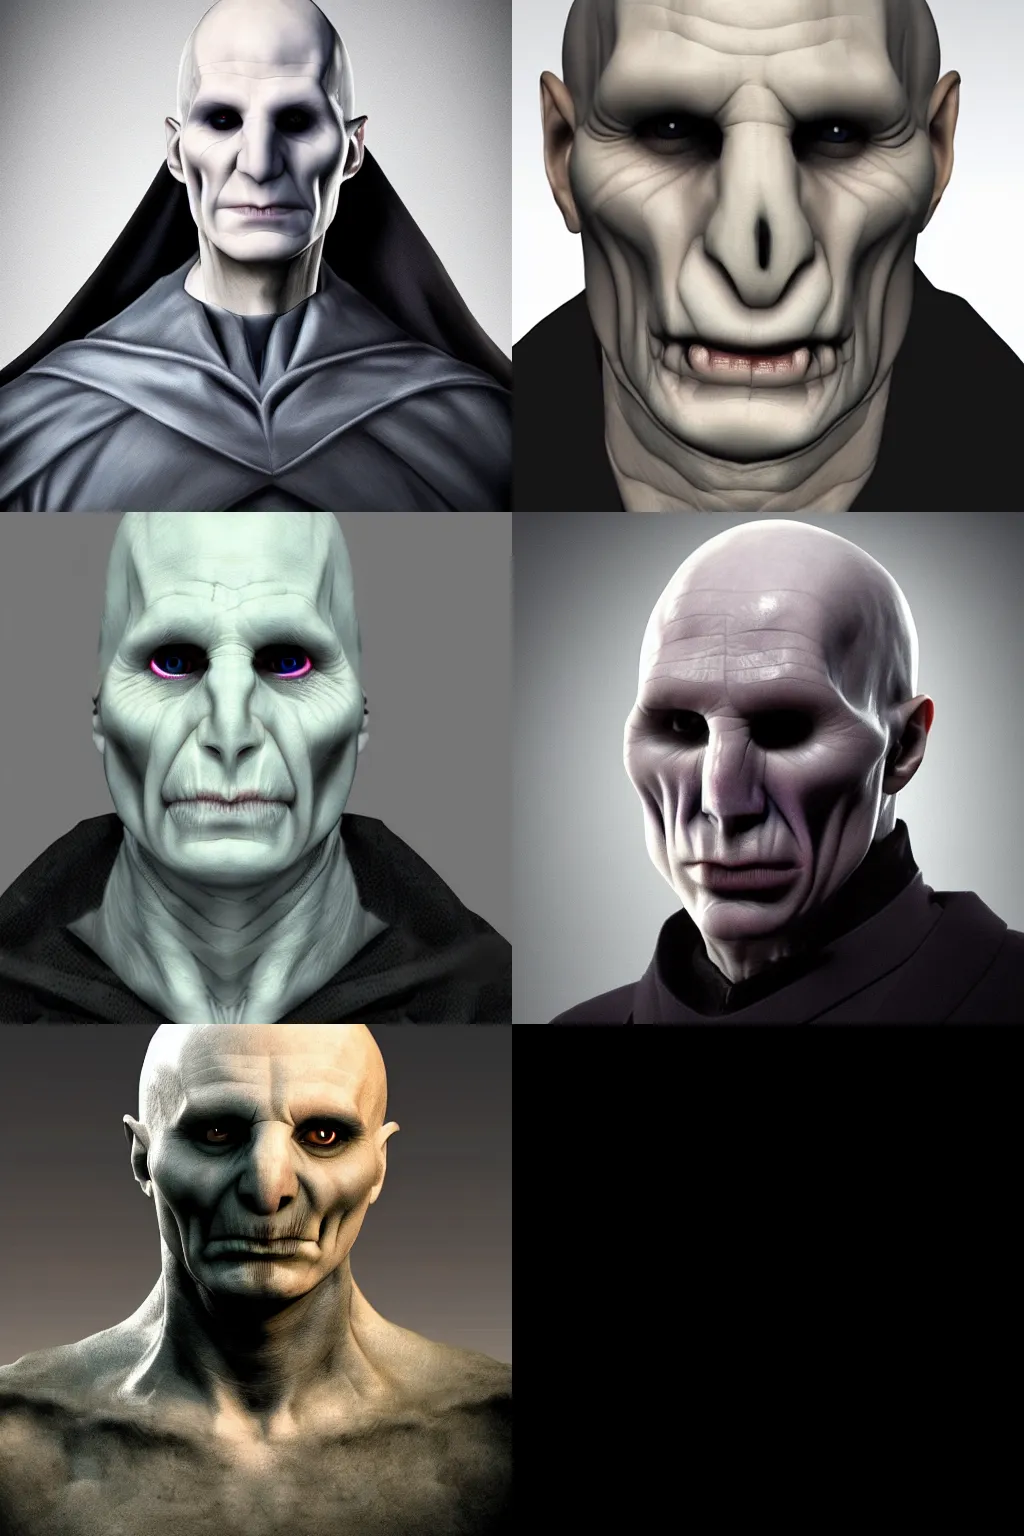 Prompt: Voldemort HD Photorealistic